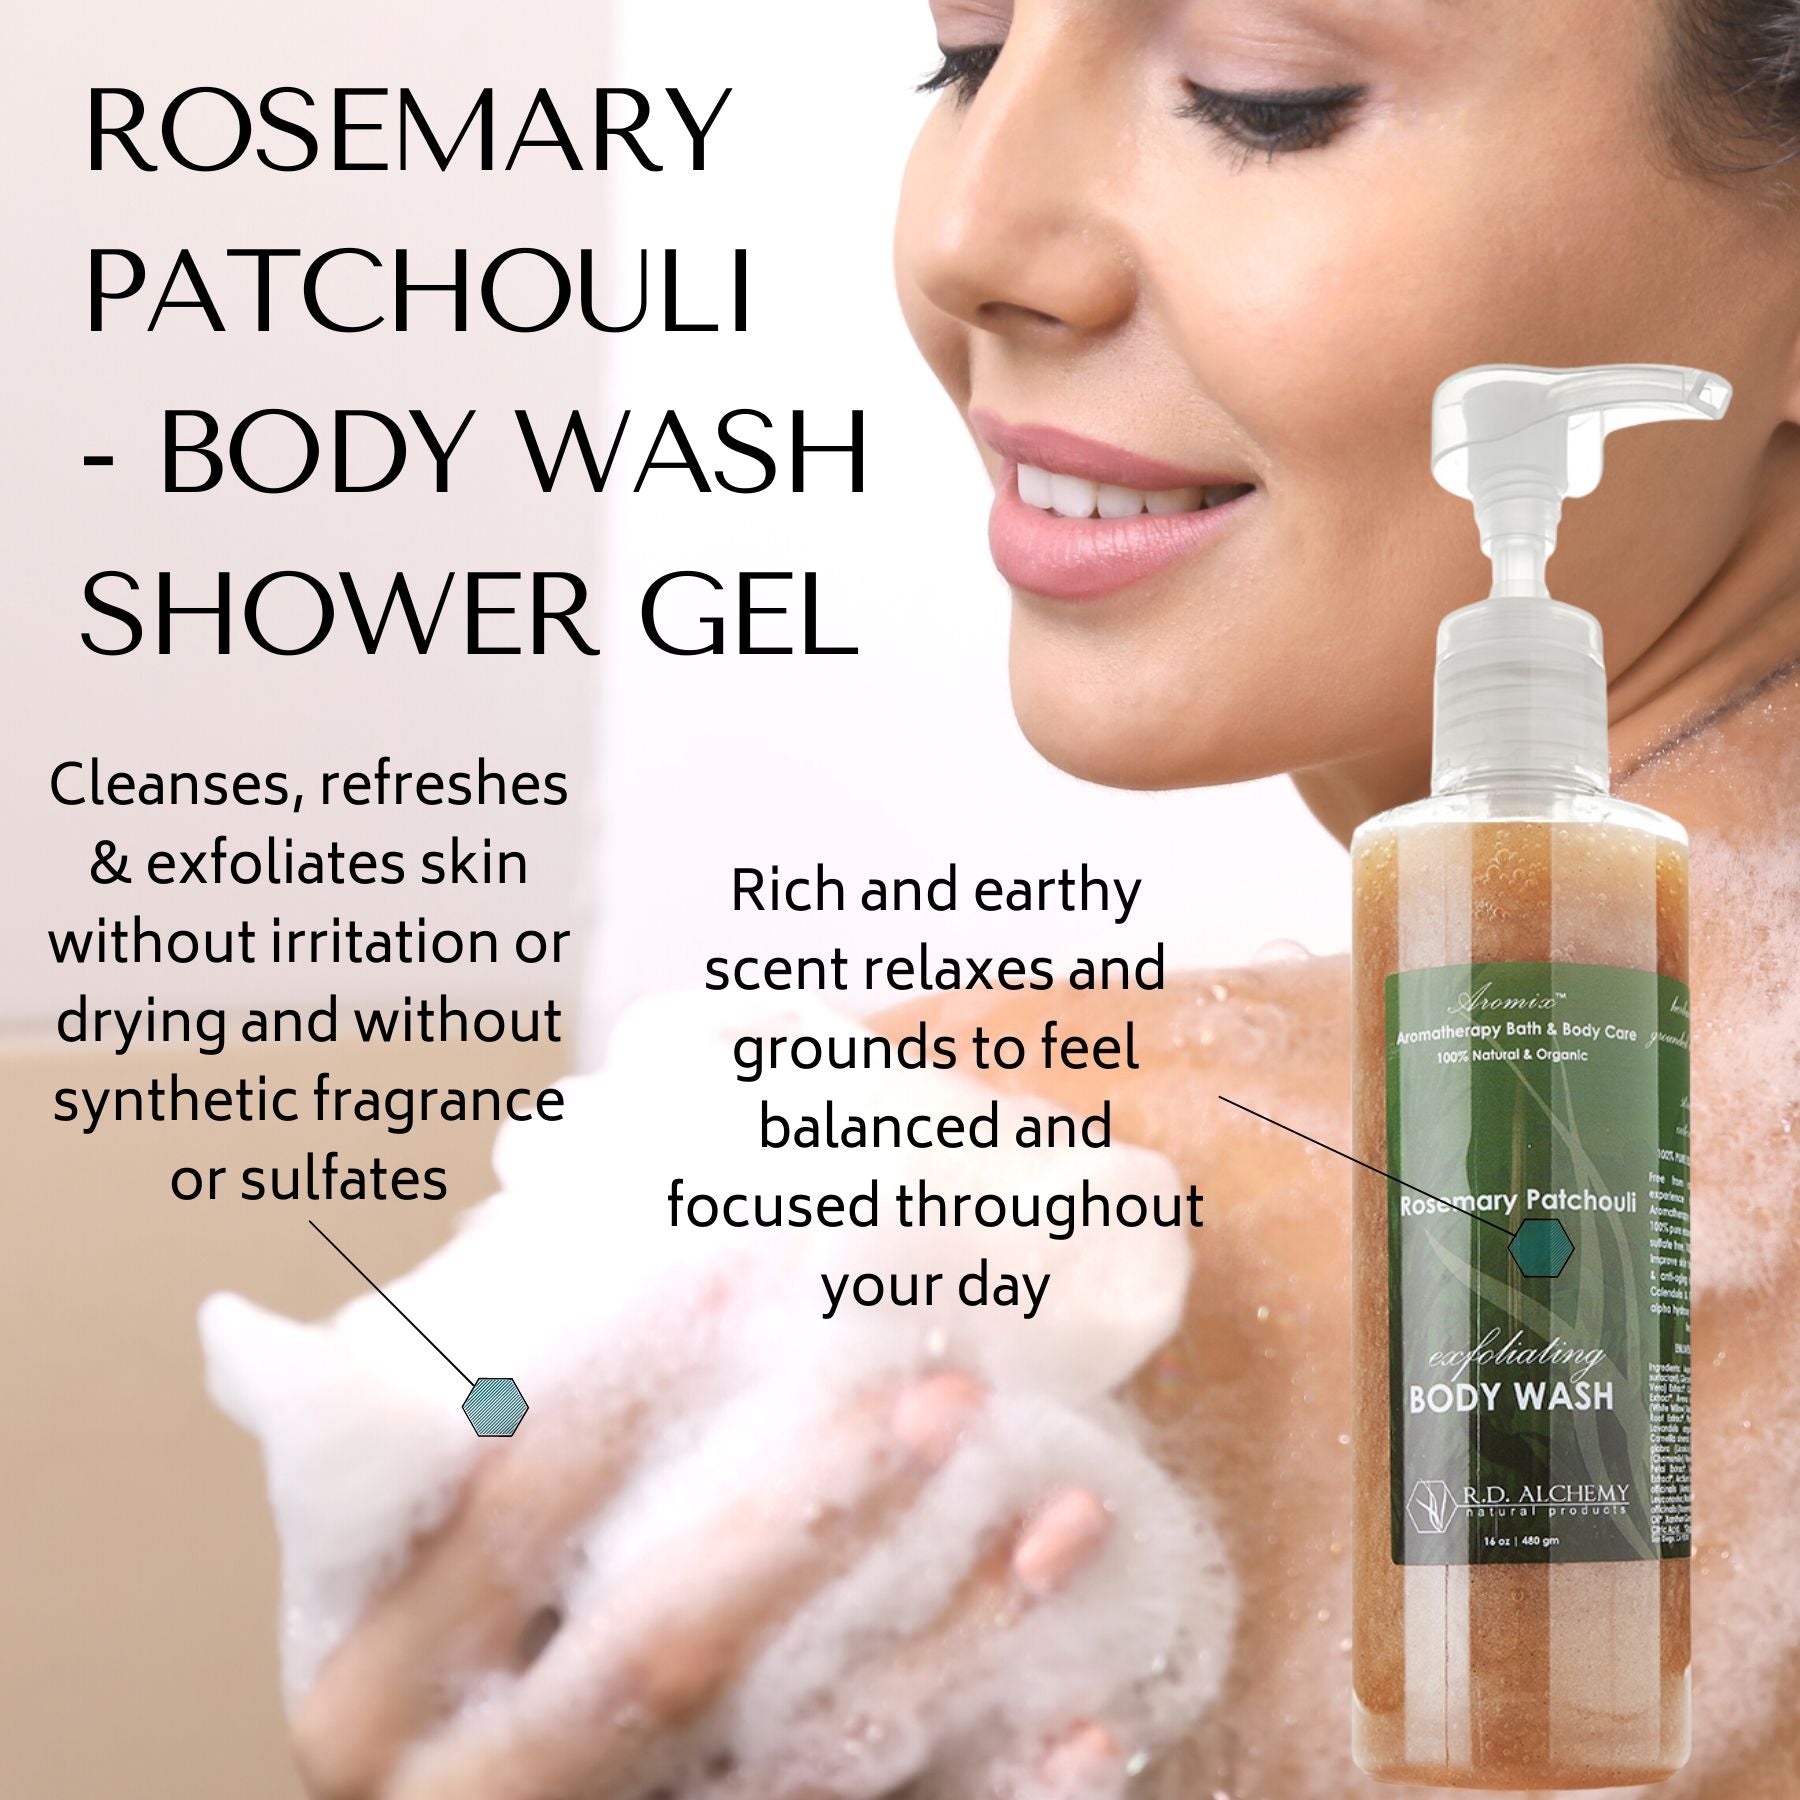 Rosemary Patchouli - Body Wash Shower Gel